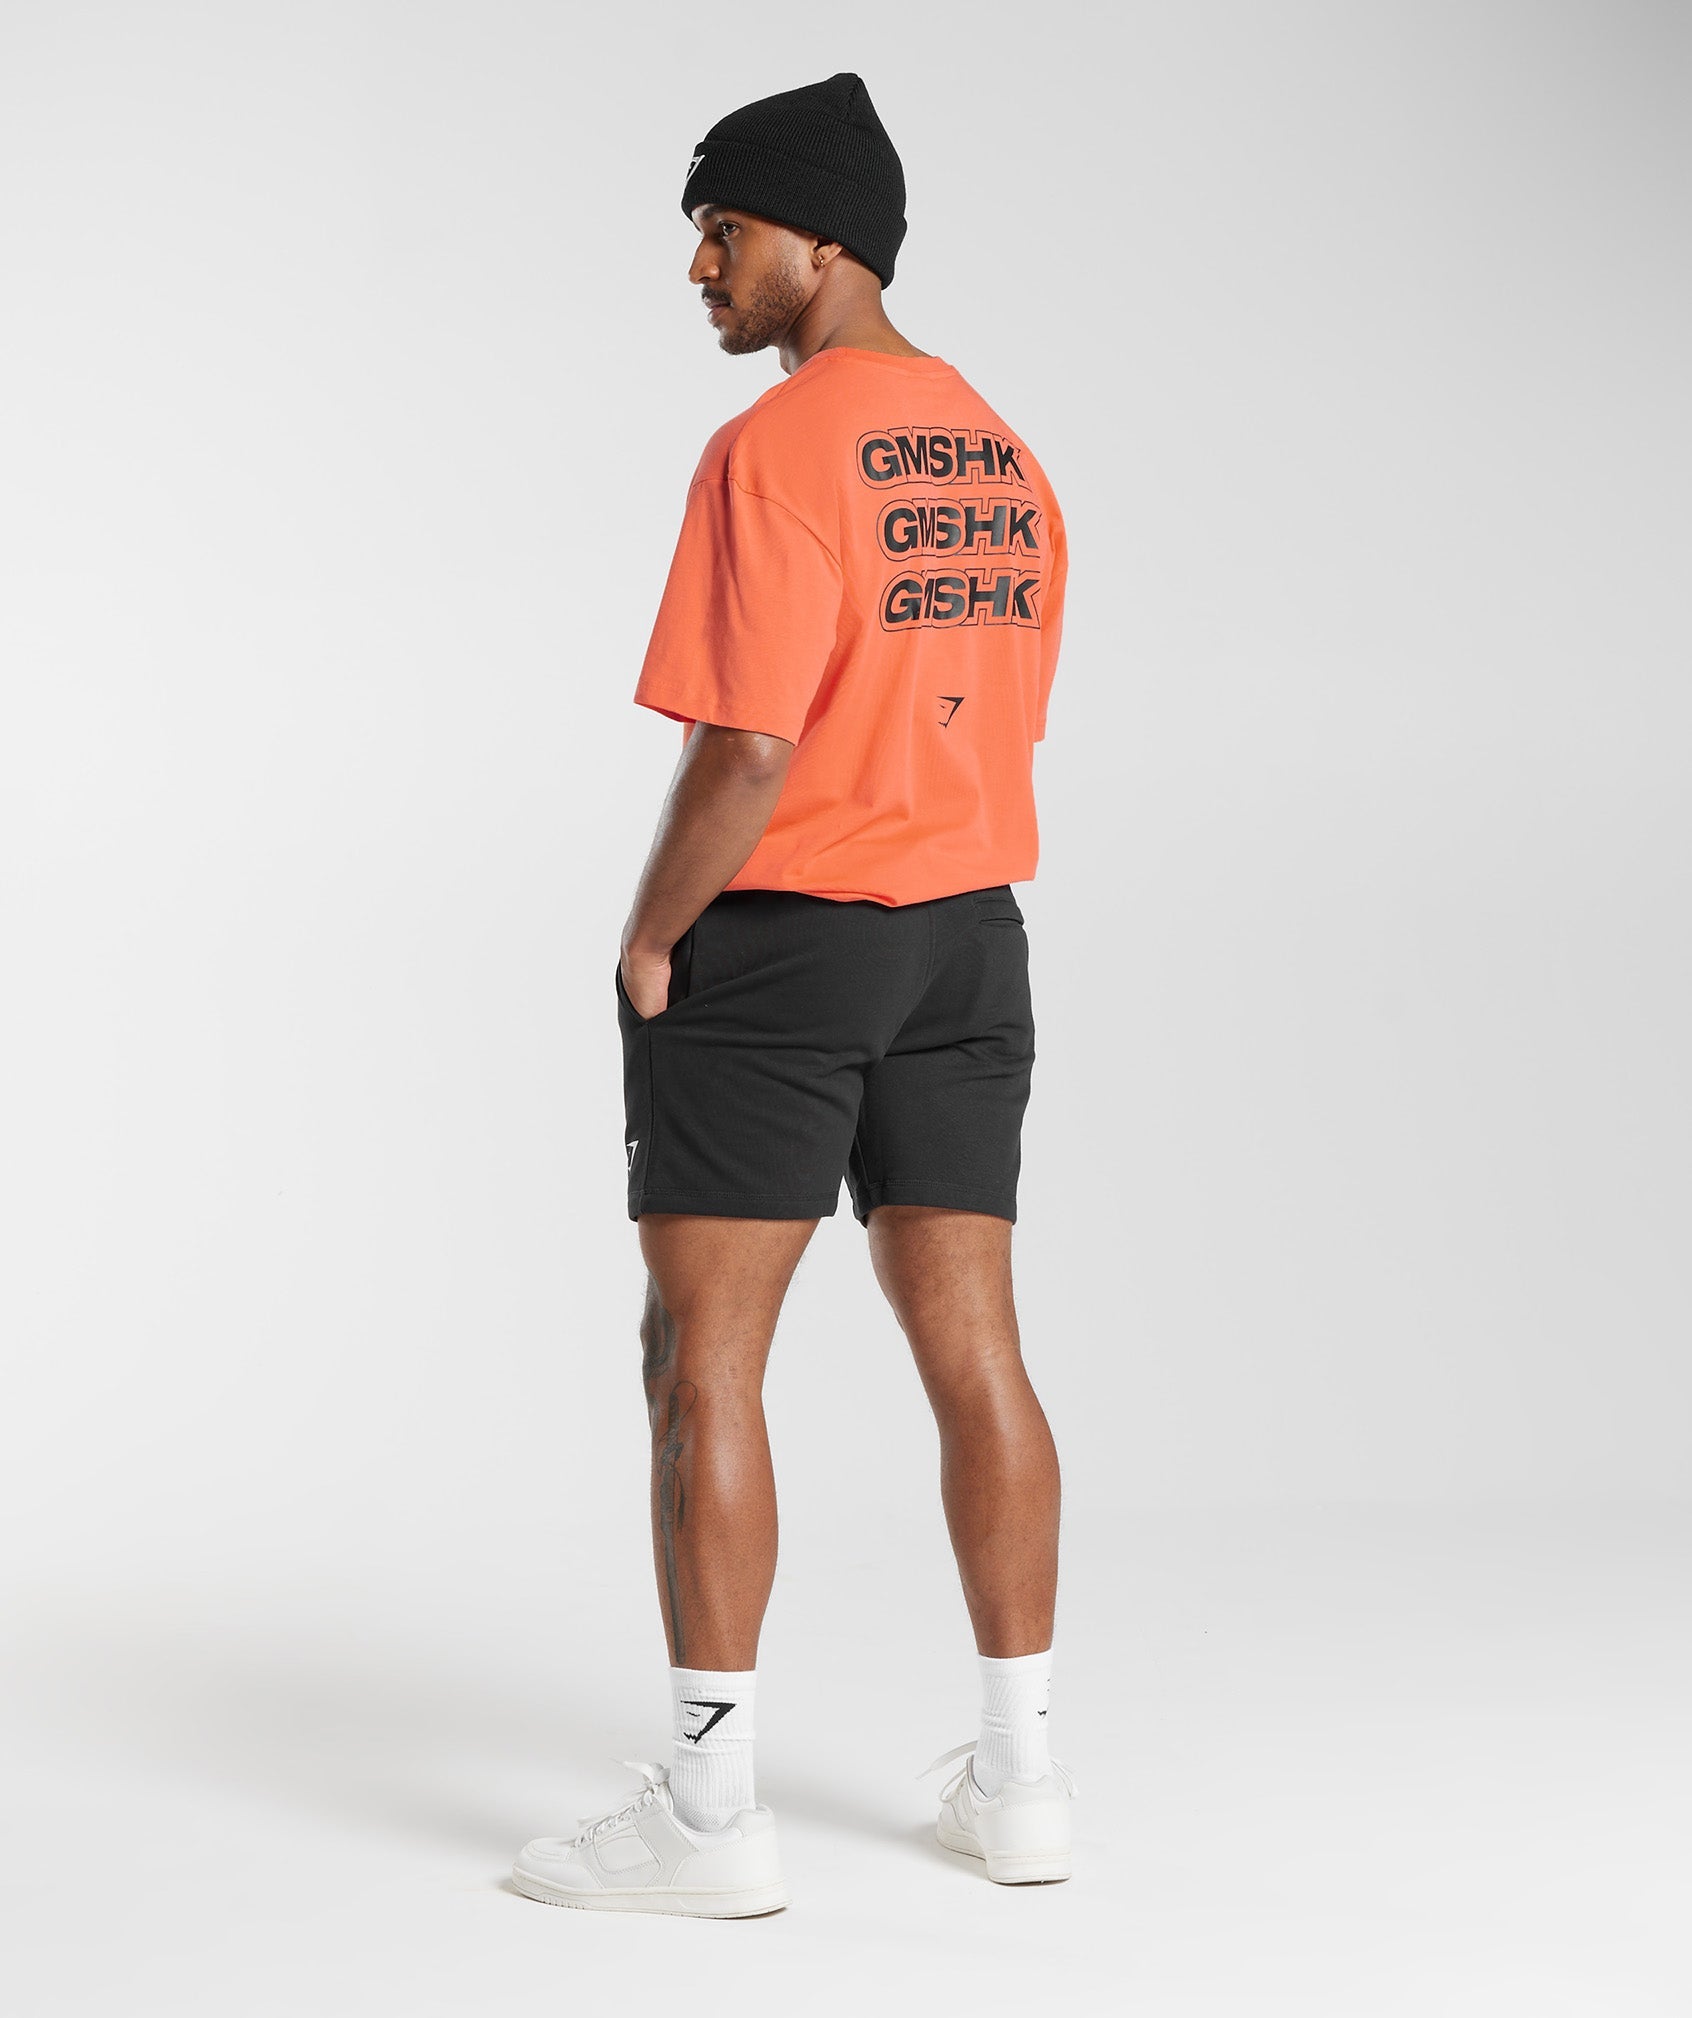 GMSHK Oversized T-Shirt in Solstice Orange - view 4